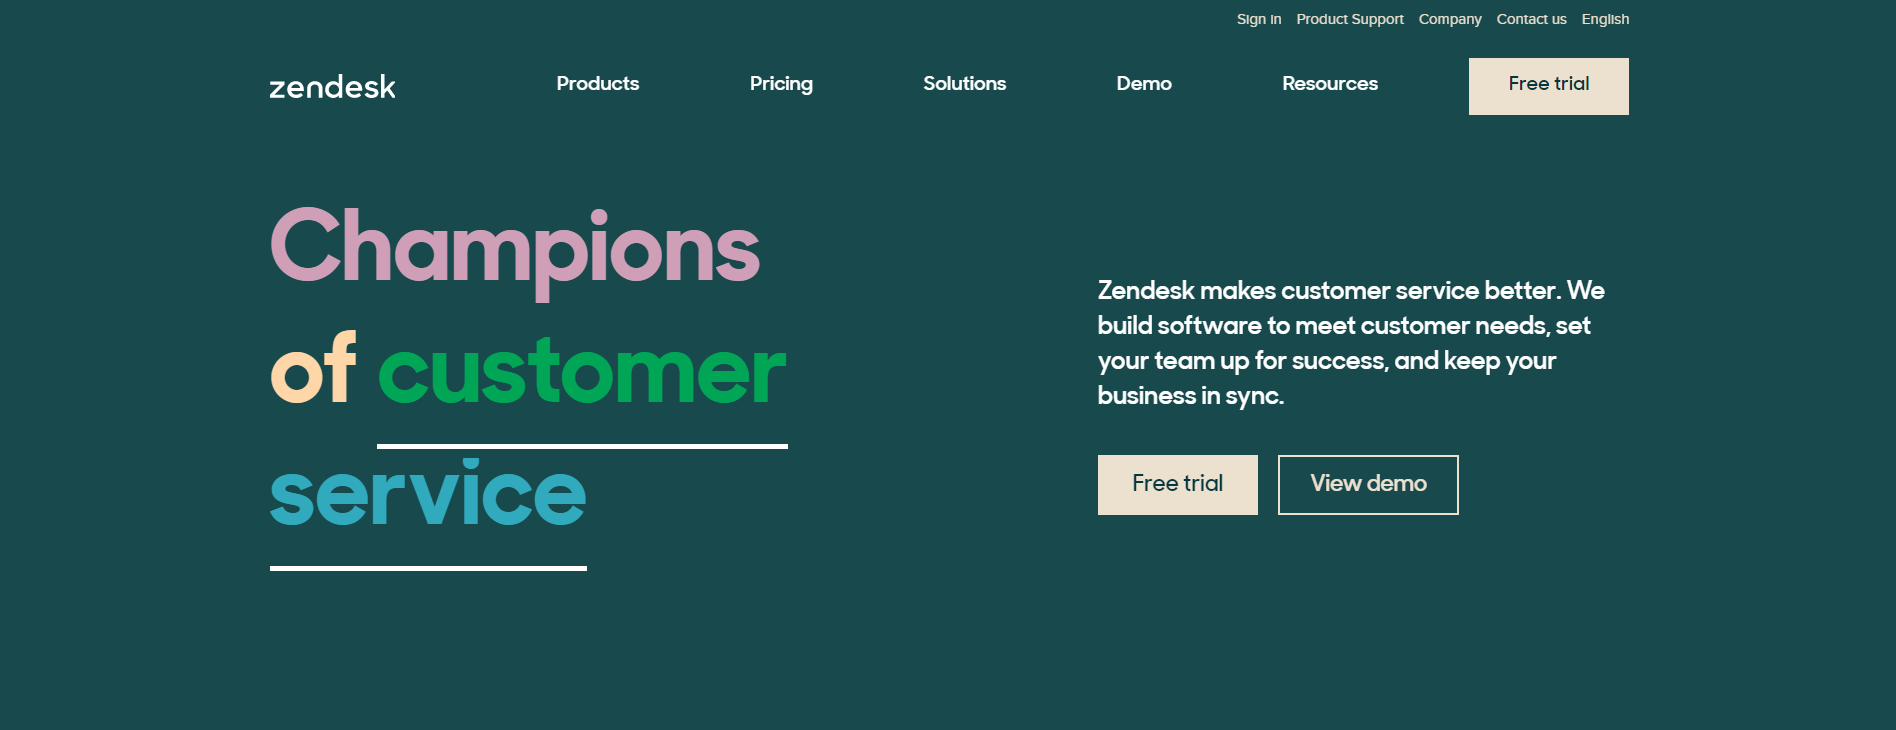 zendesk customer support tool